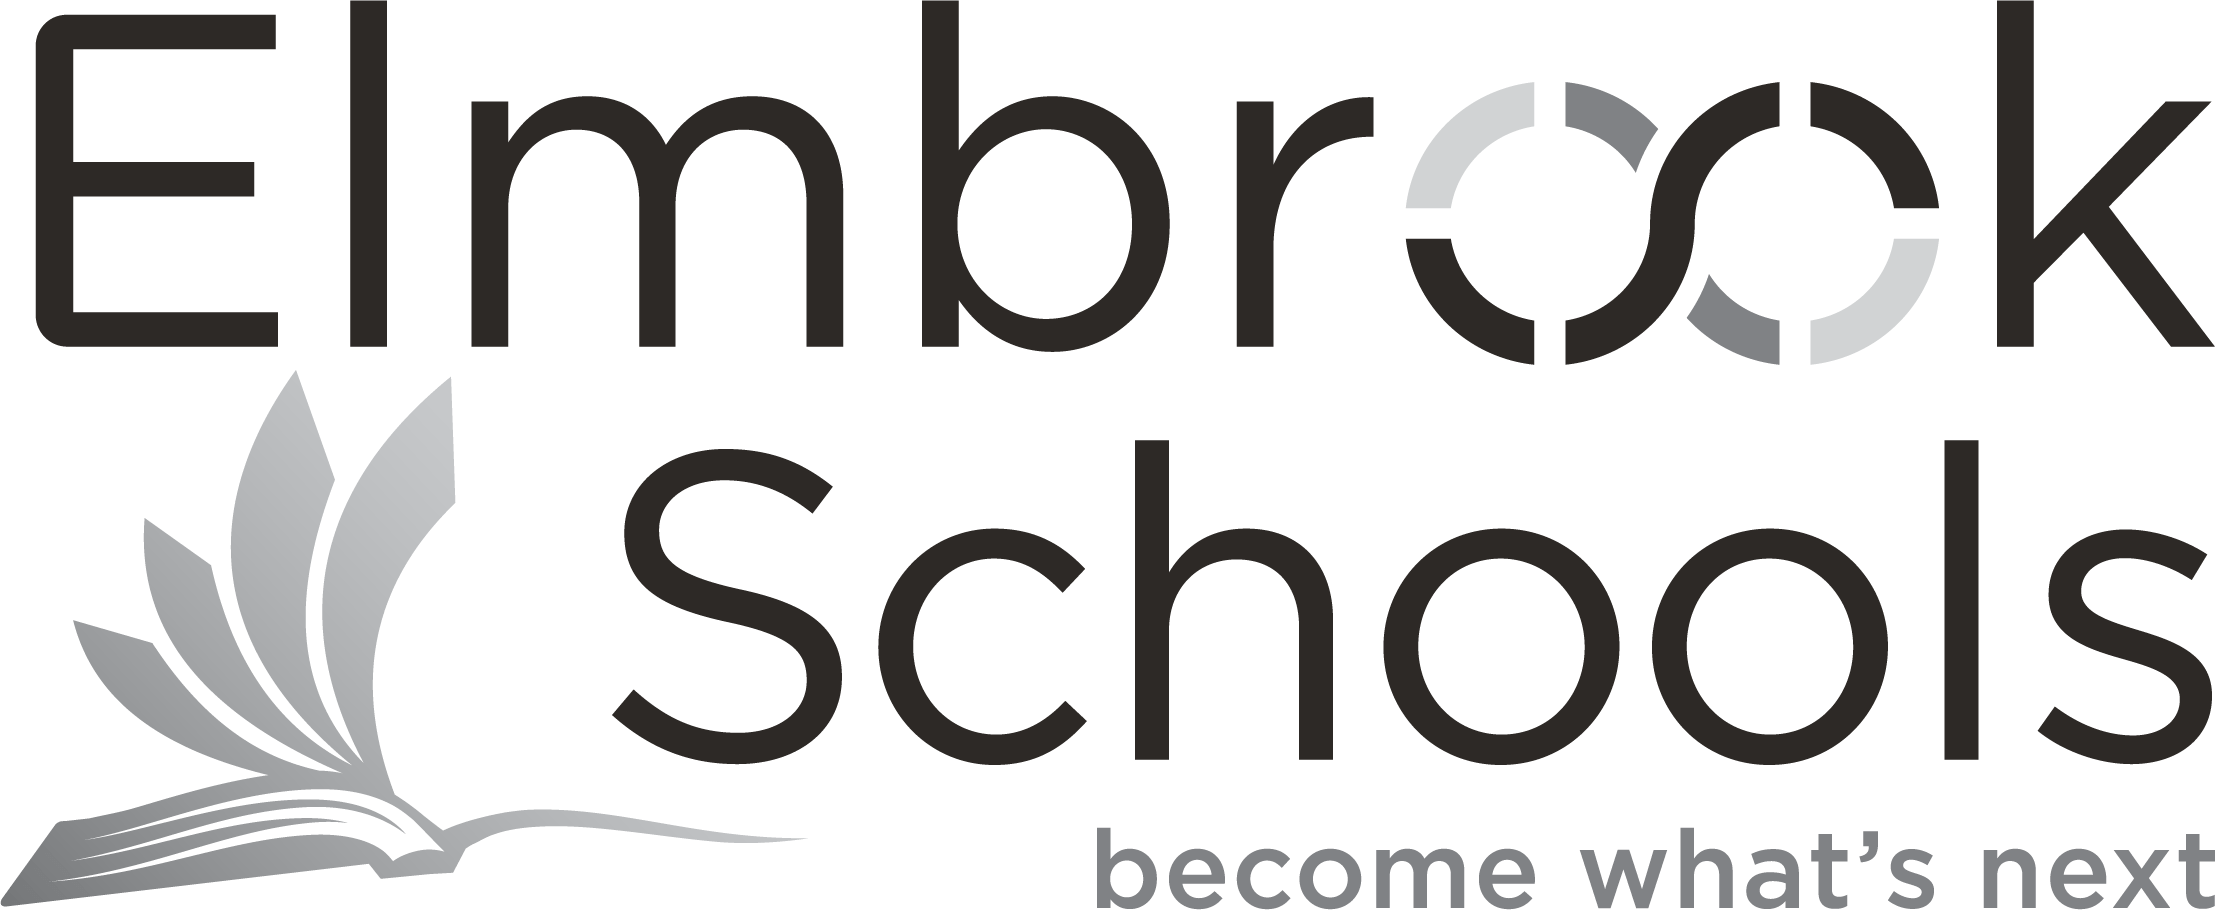 Only Logo - Logos & Brand Guidelines - Elmbrook Schools